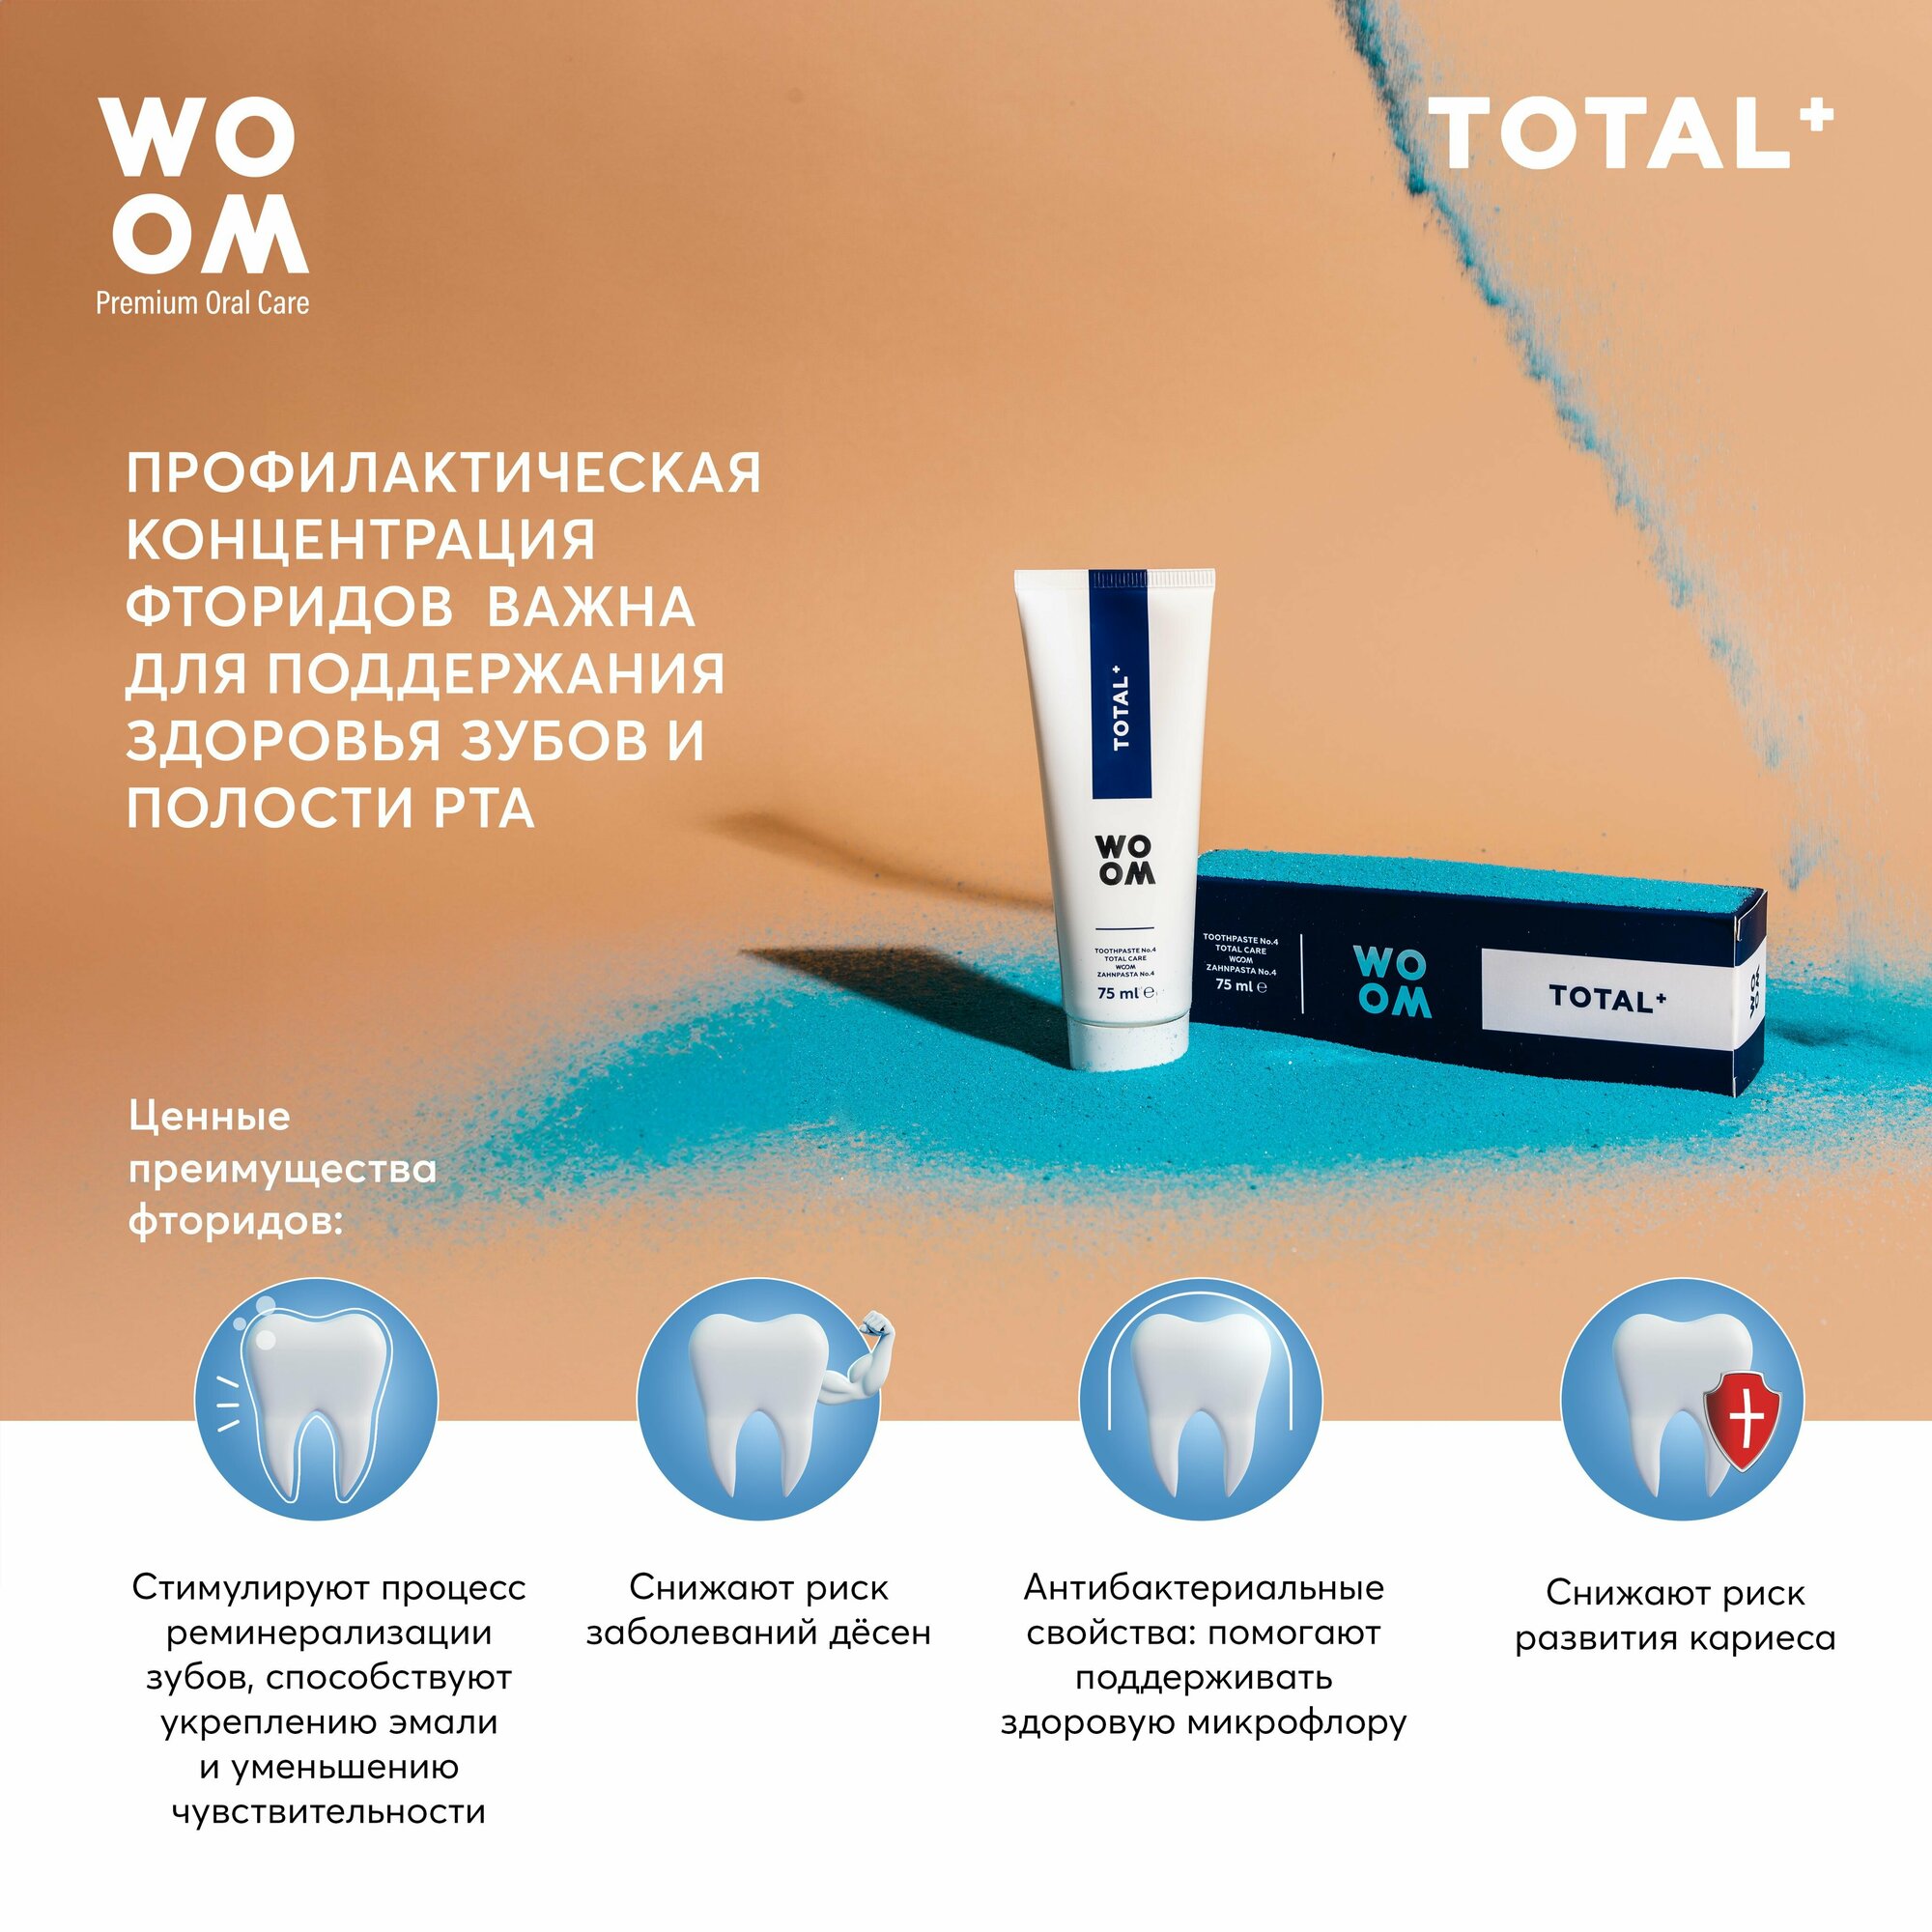 Зубная паста для комплексного ухода WOOM TOTAL+, 75 мл